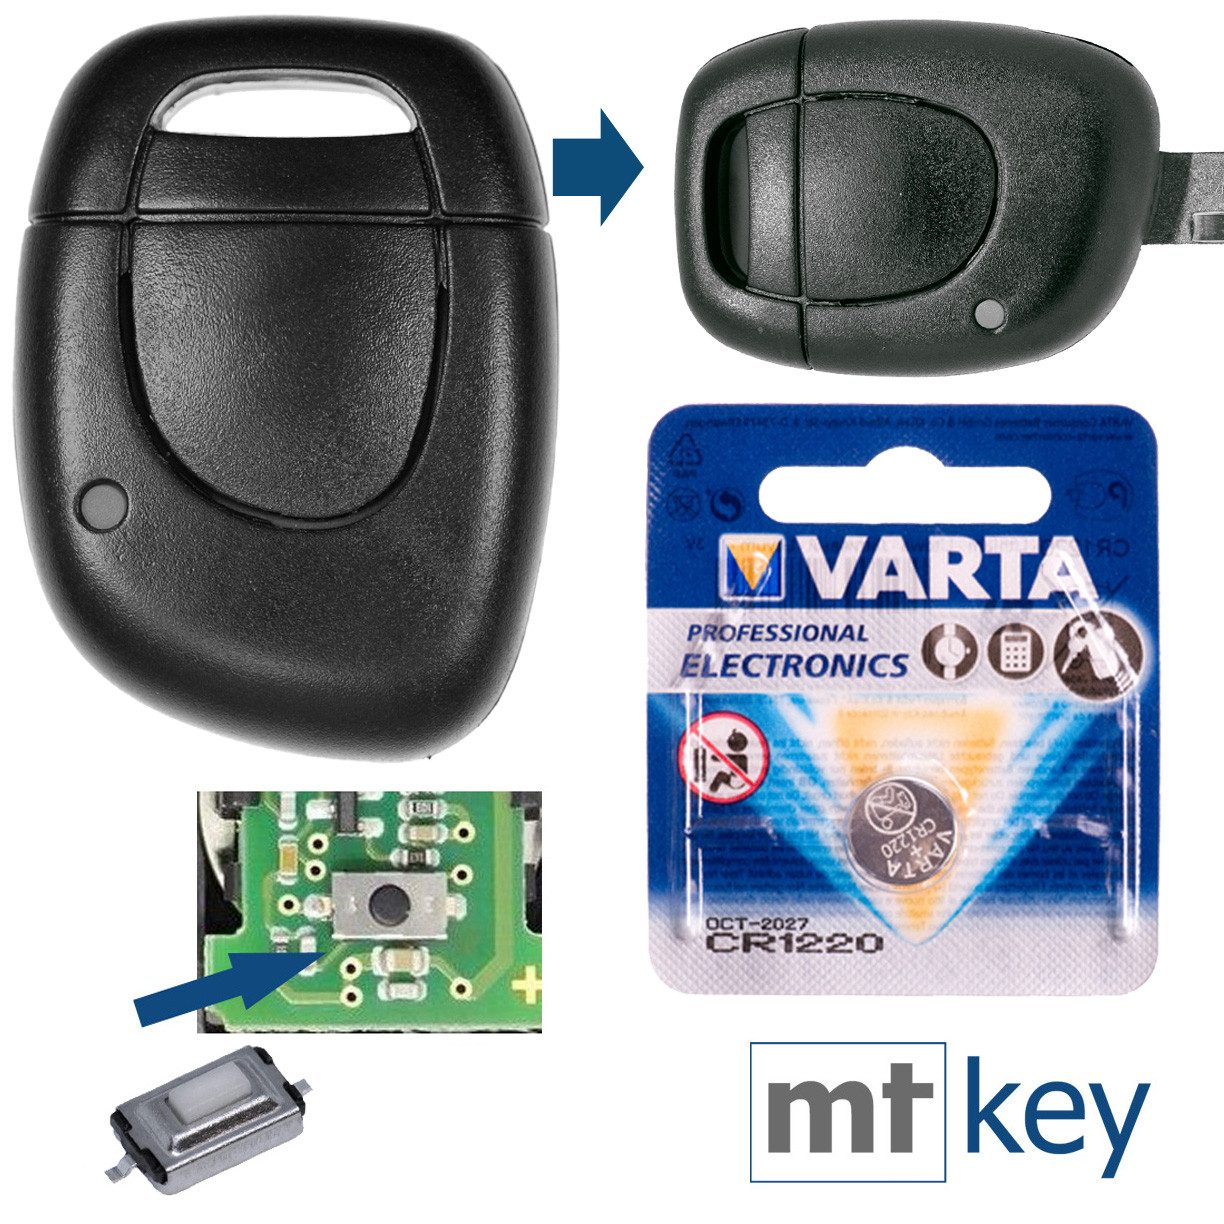 mt-key Auto Schlüssel Reparatur Gehäuse + 1x Mikrotaster + VARTA CR1220 Knopfzelle, CR1220 (3 V), für Renault Kangoo II Twingo C06 Clio II Funk Fernbedienung